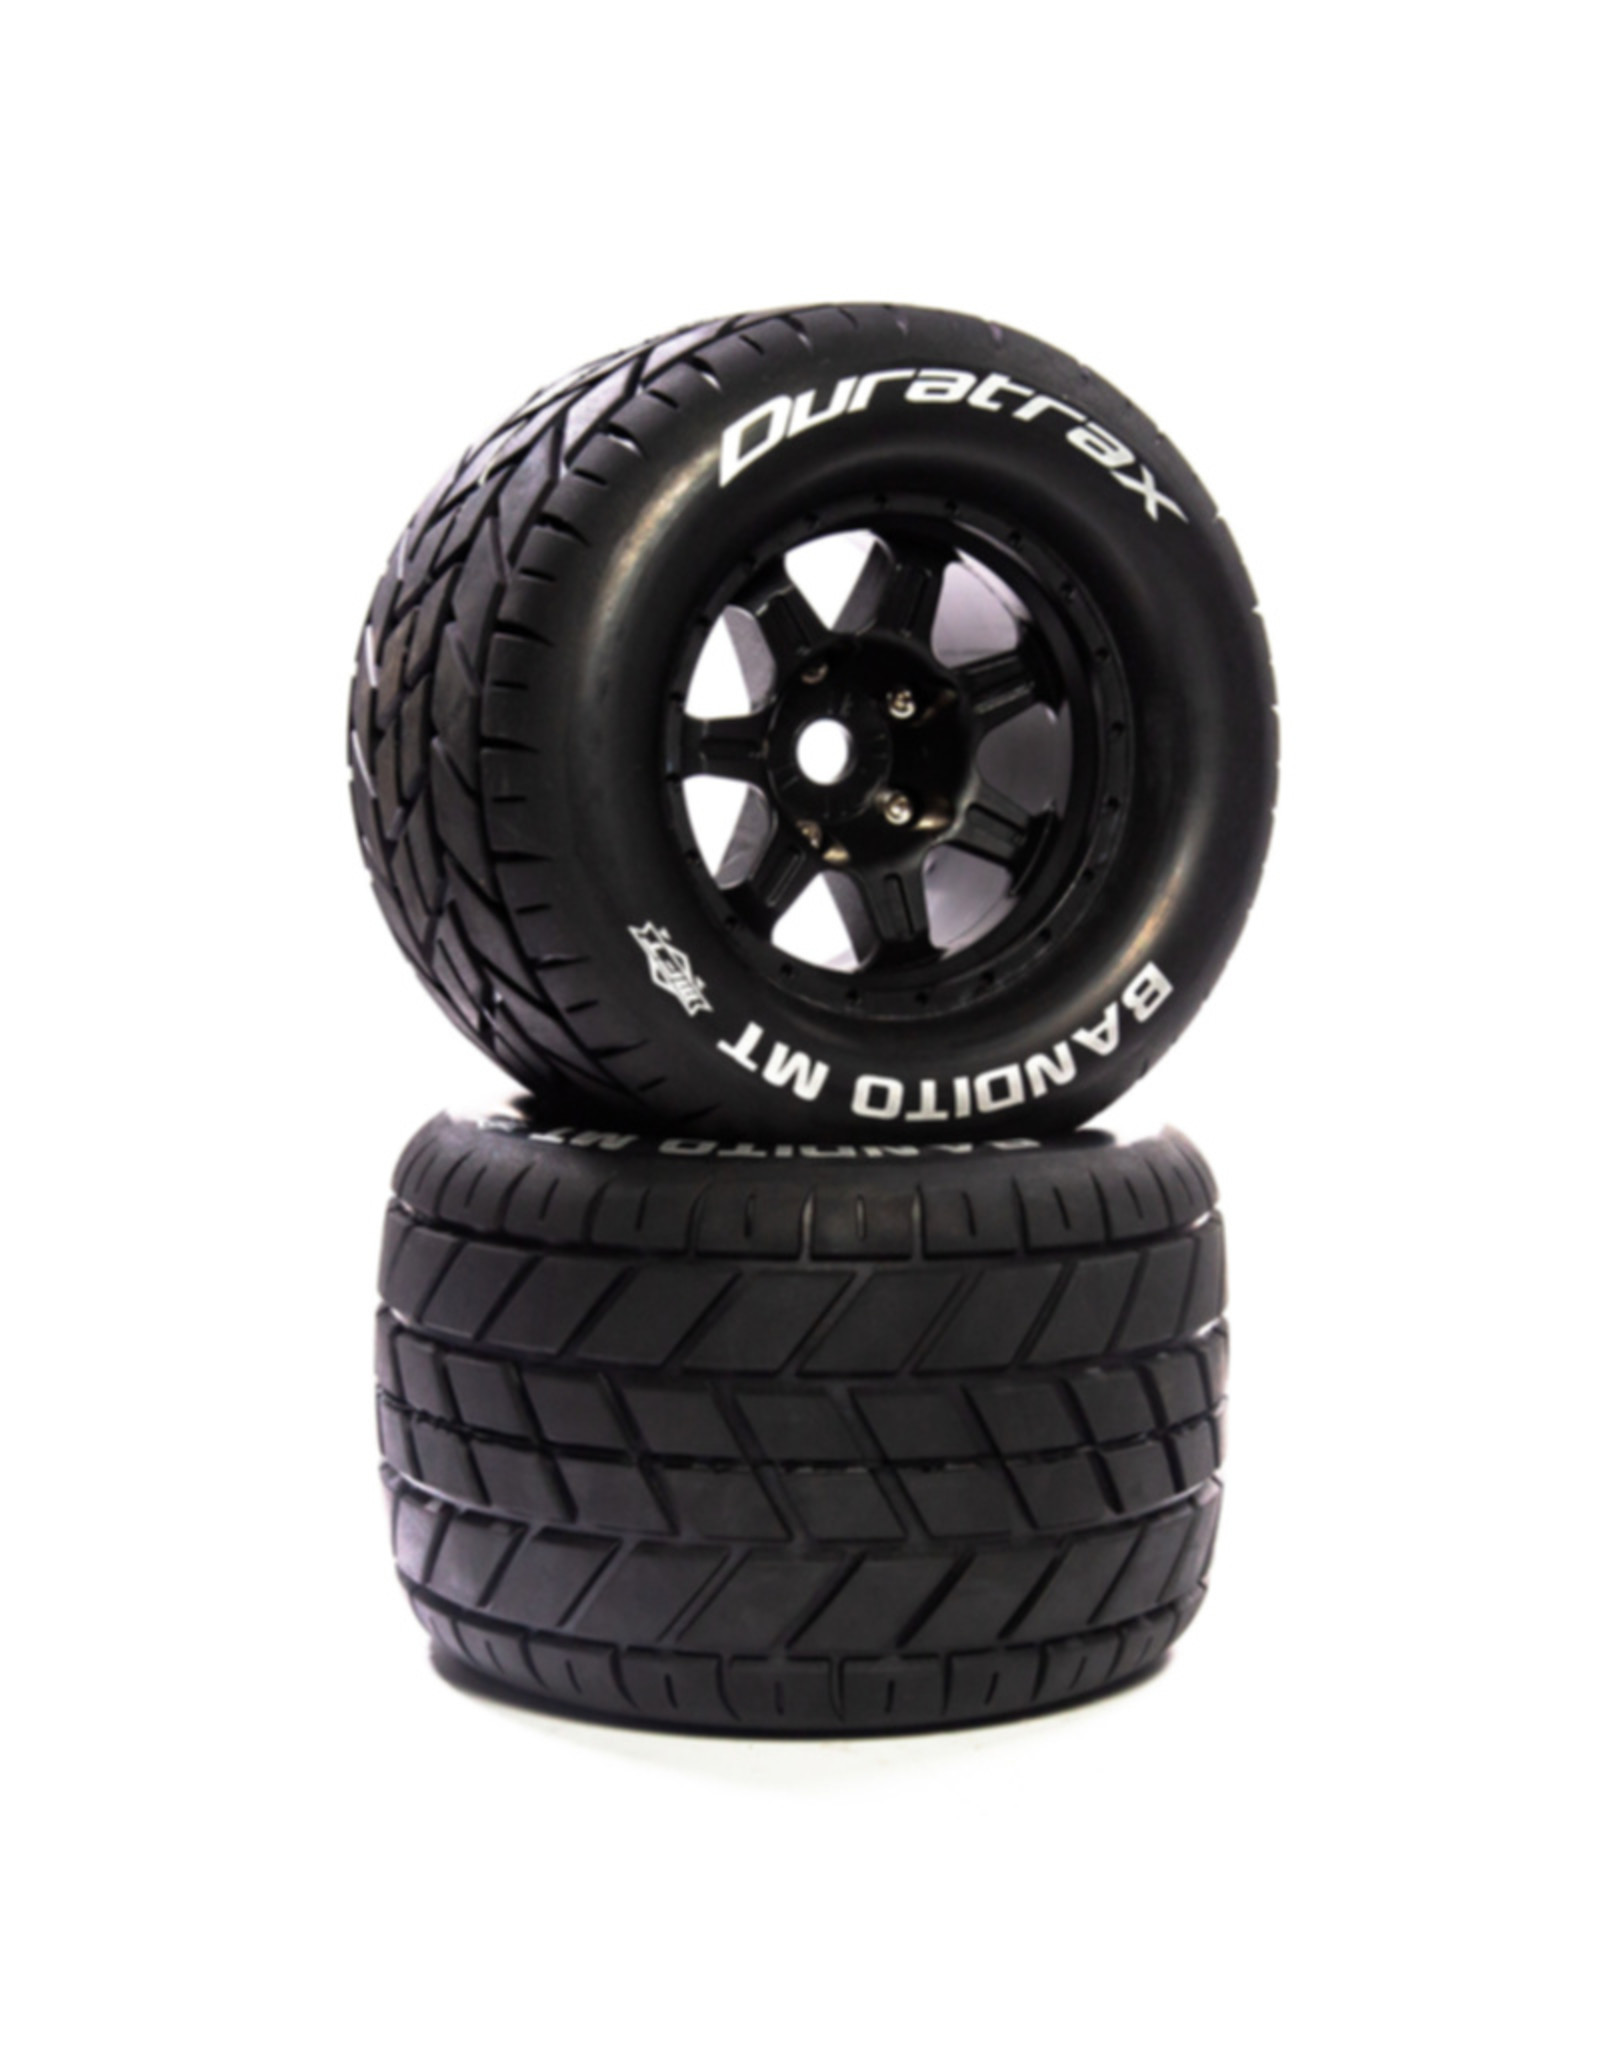 Duratrax DTXC5628  Bandito MT Belt 3.8" Mounted Front/Rear Tires .5 Offset 17mm, Black (2)